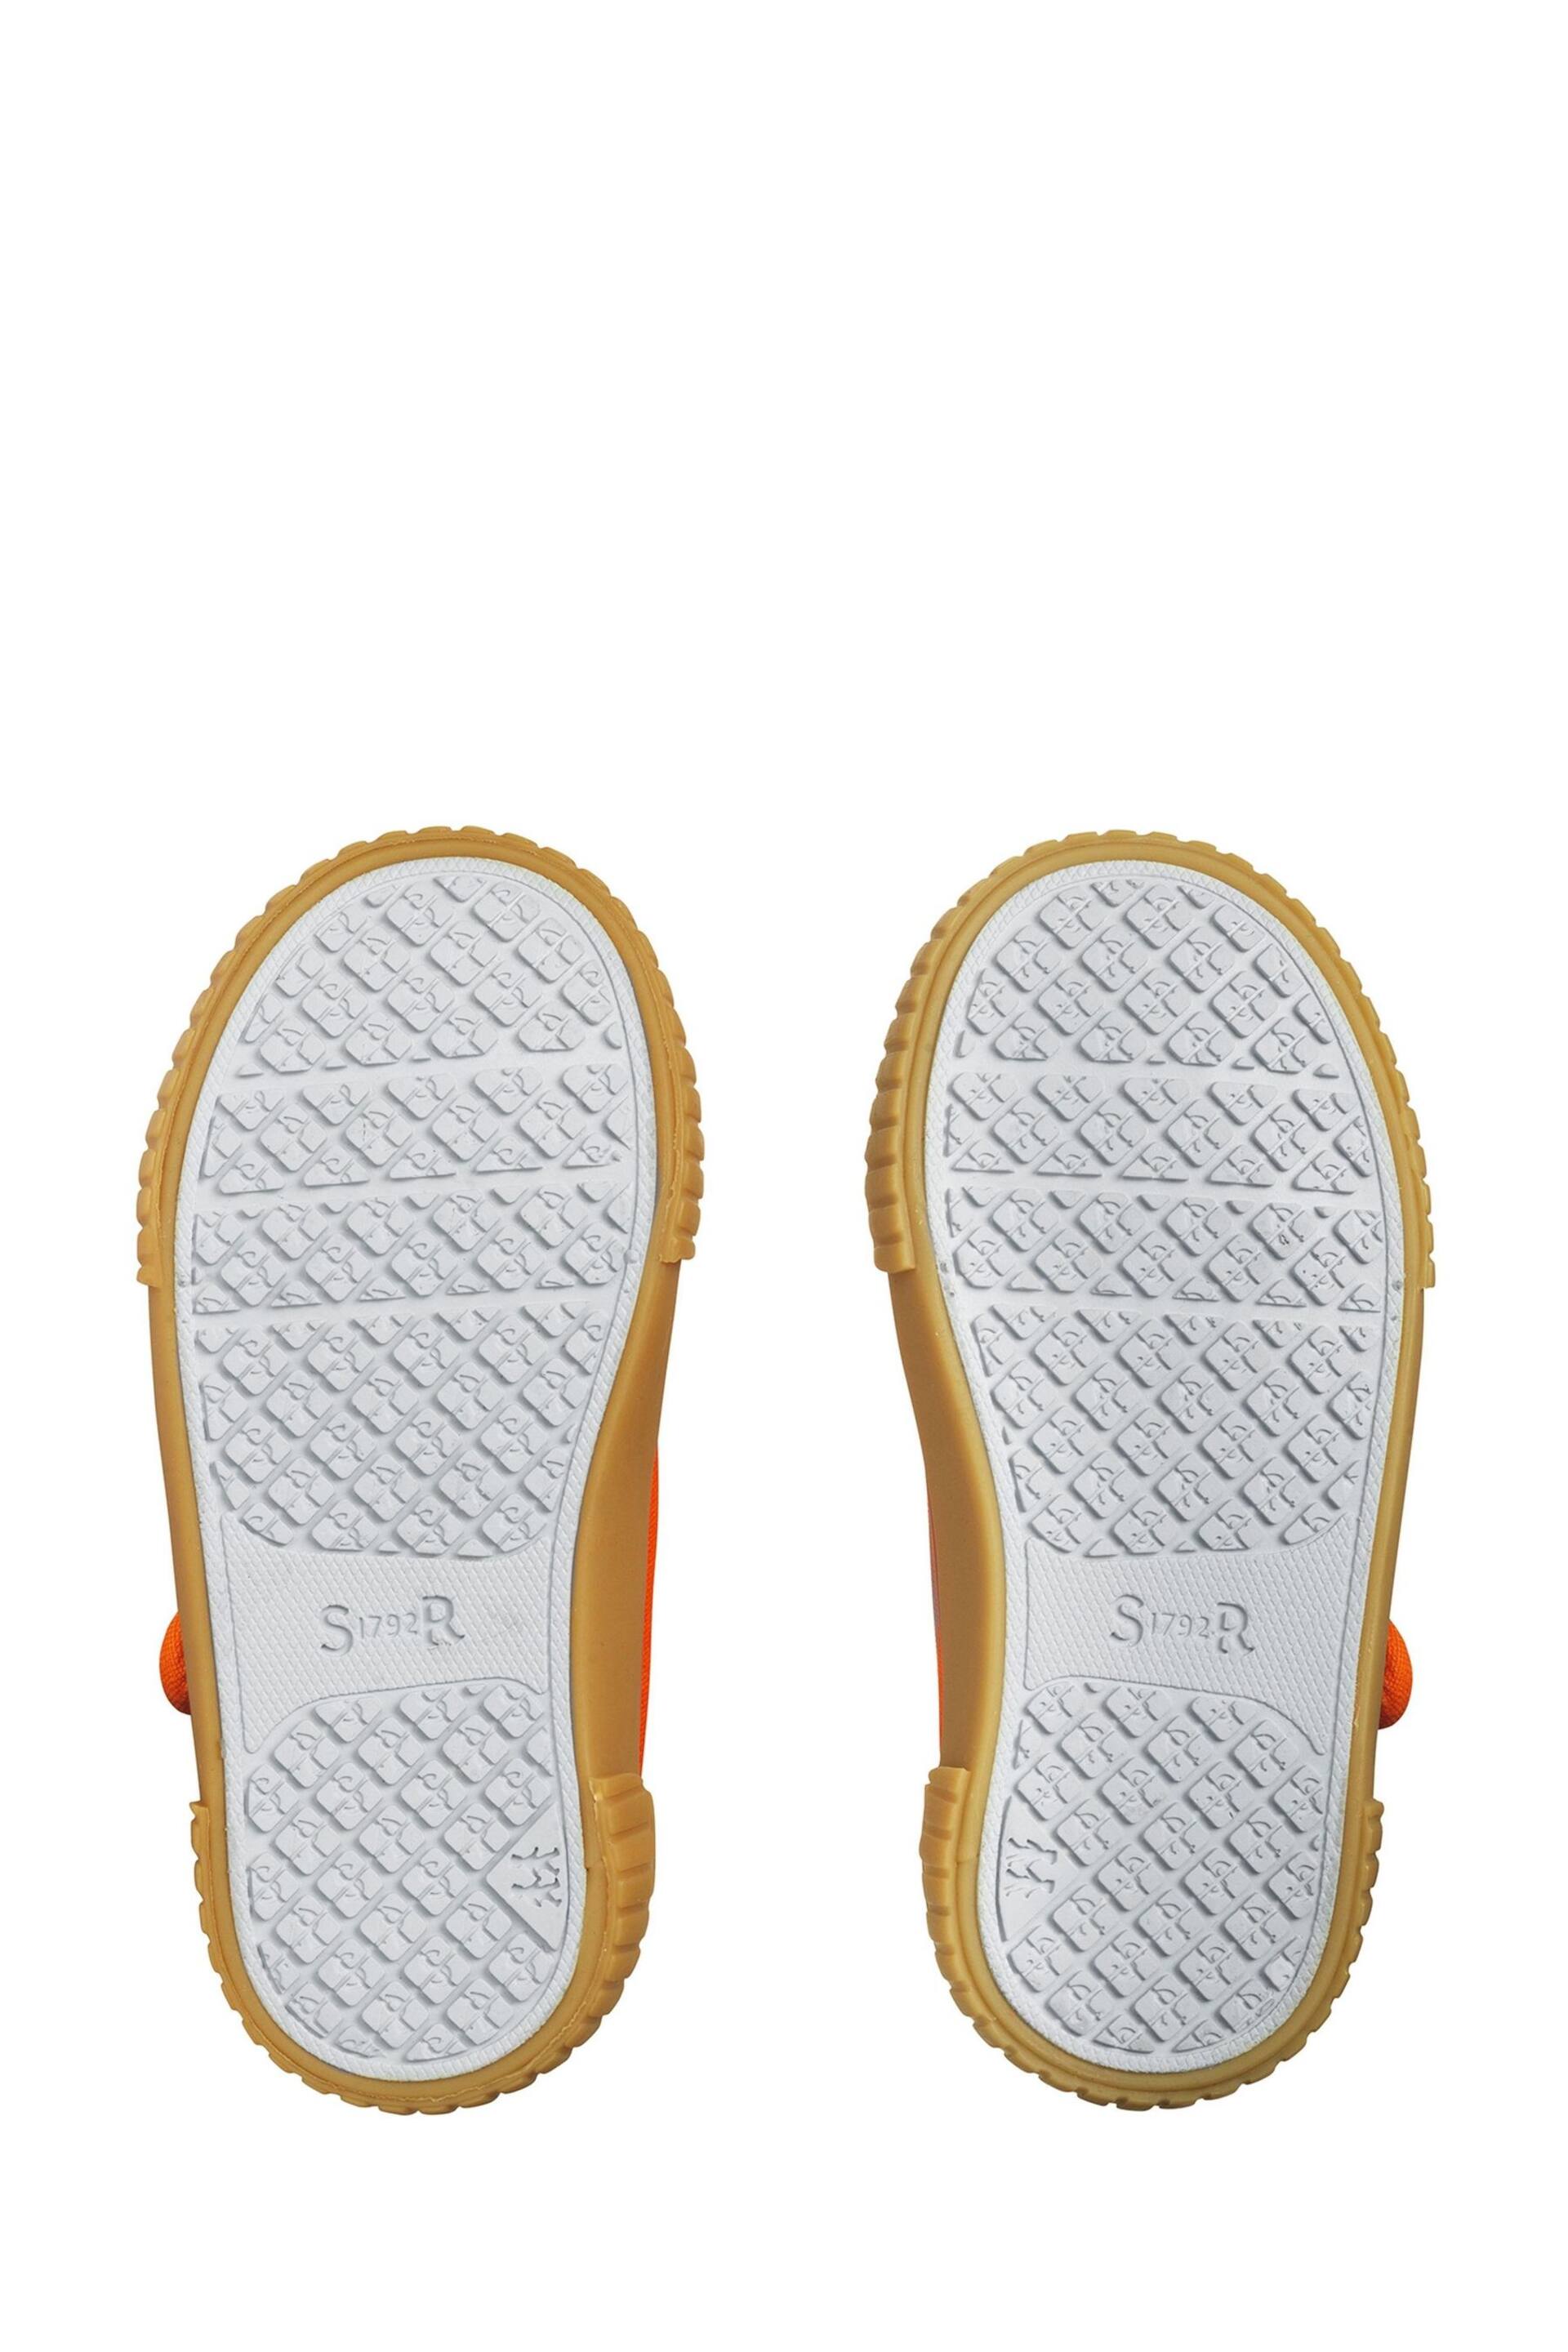 Start Rite Orange Anchor Washable Canvas T-Bar Summer Shoes - Image 2 of 3